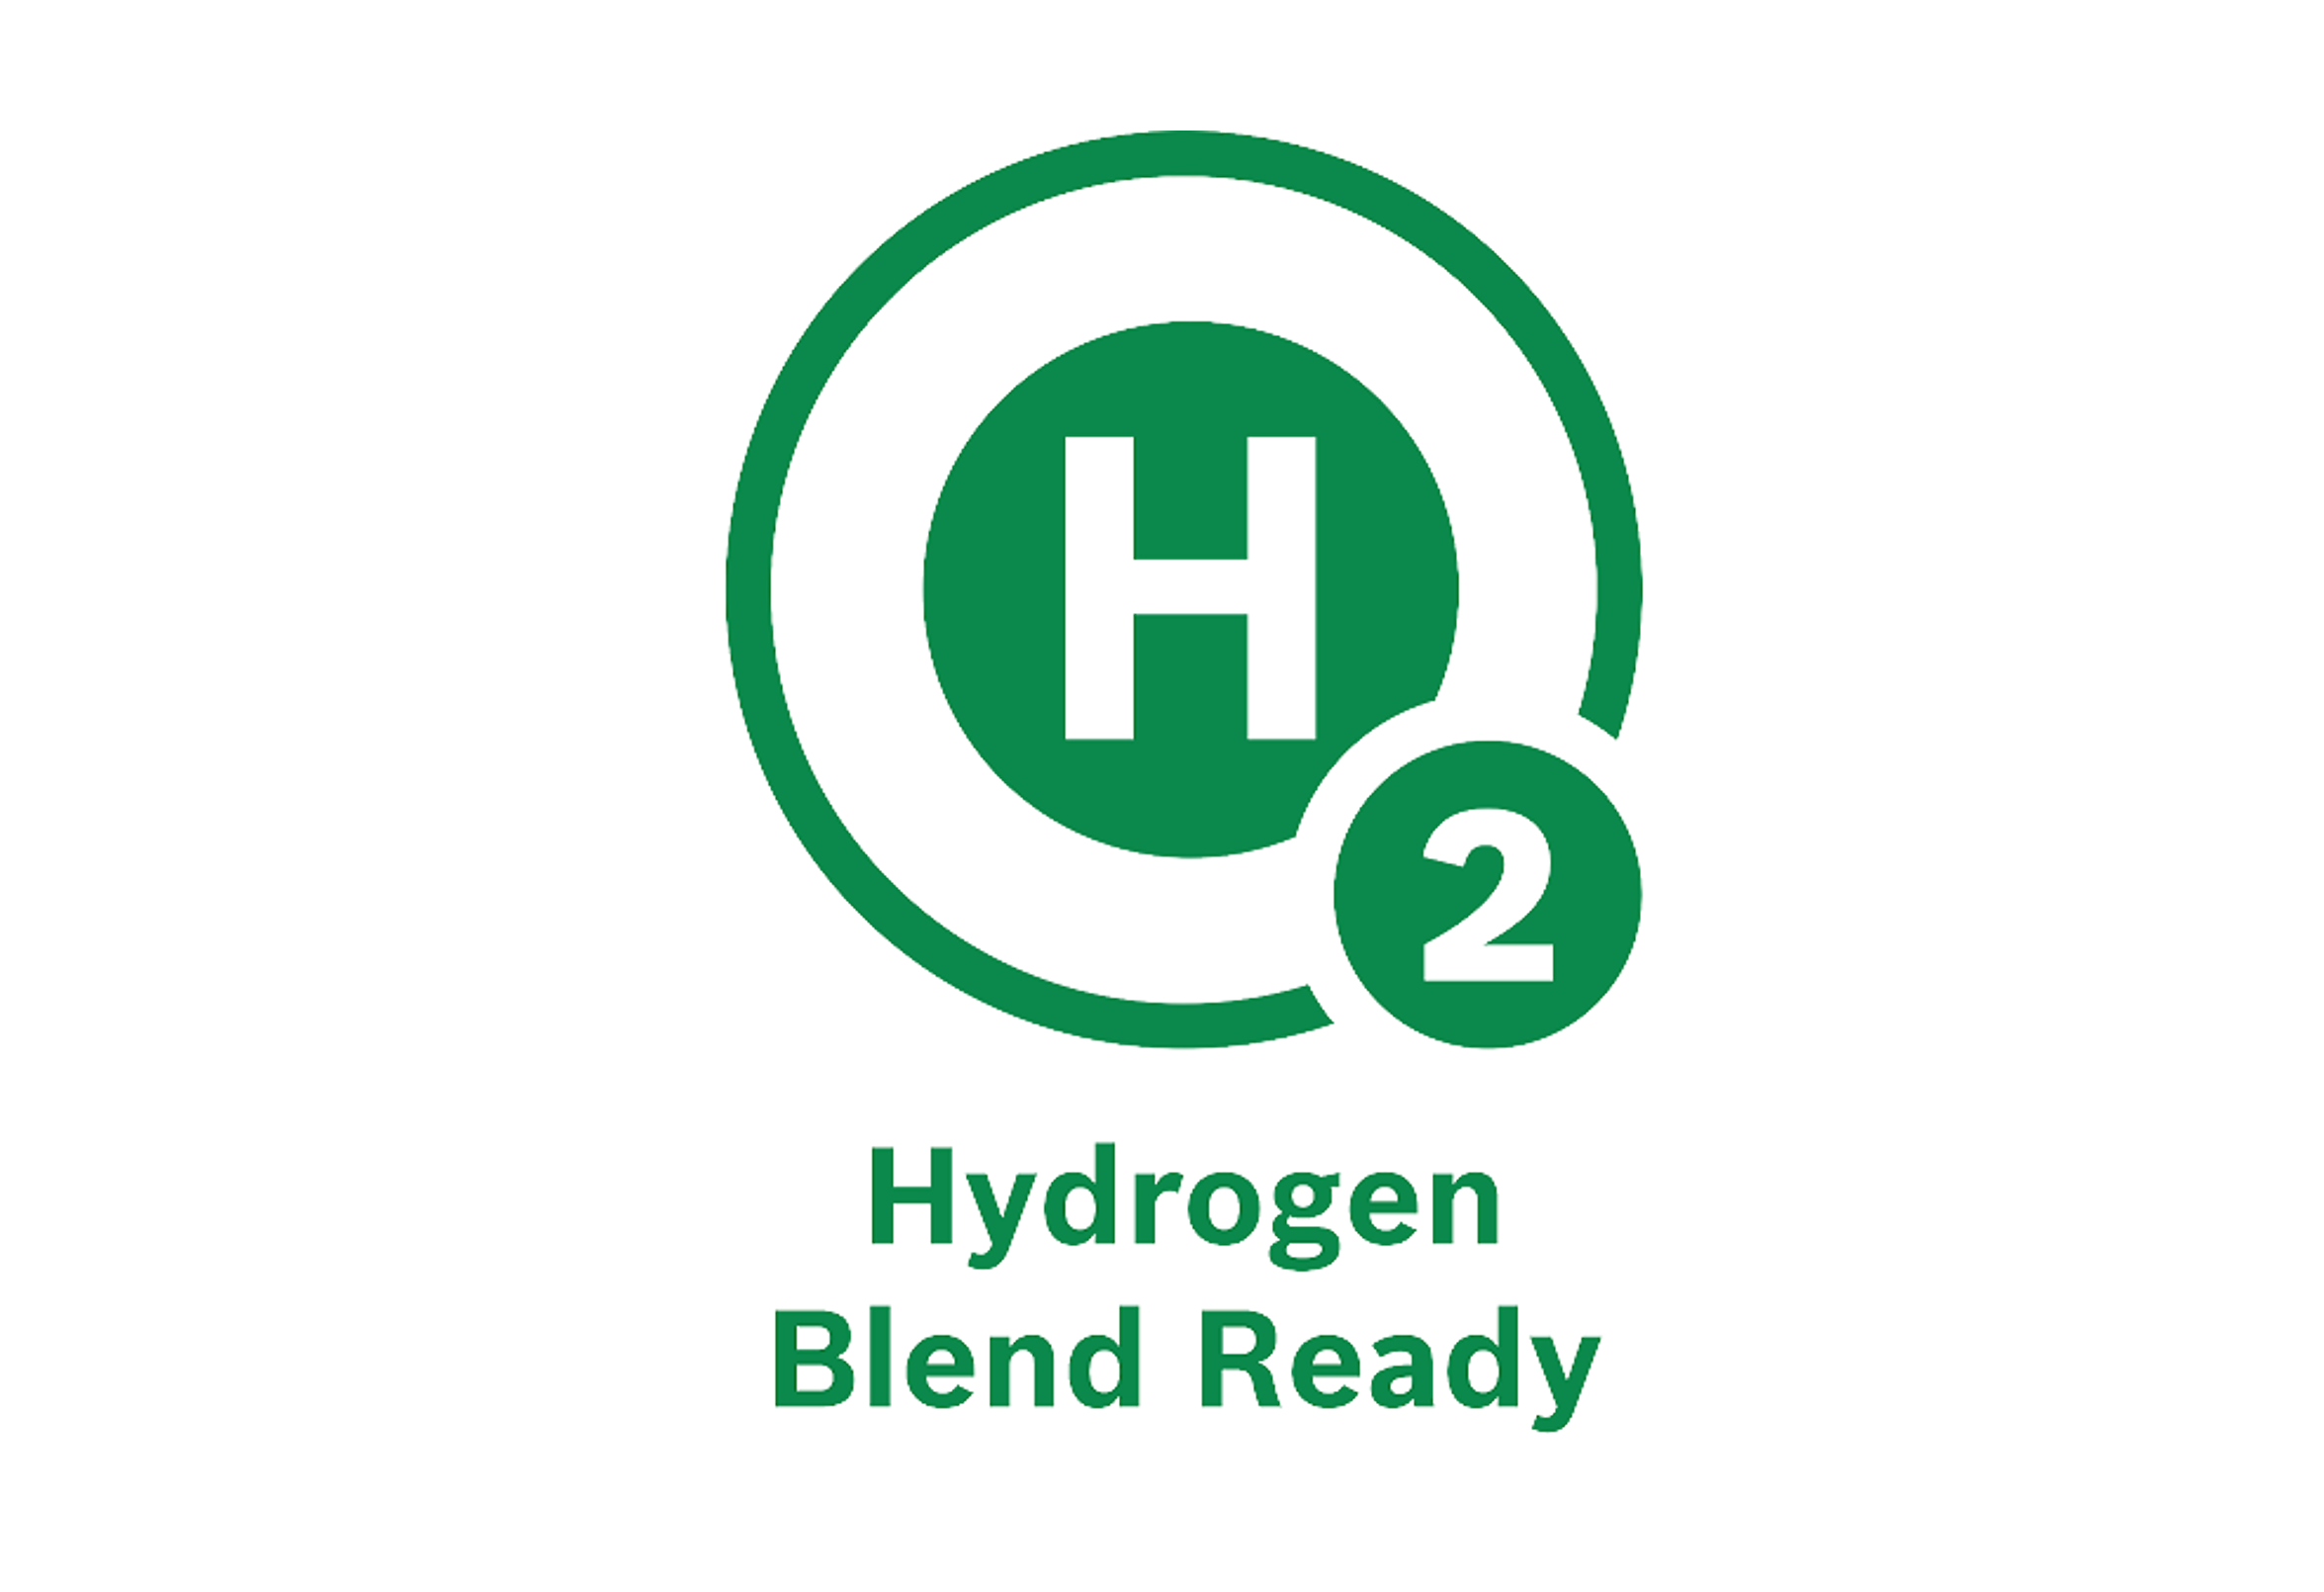 Hydrogen blend ready logo